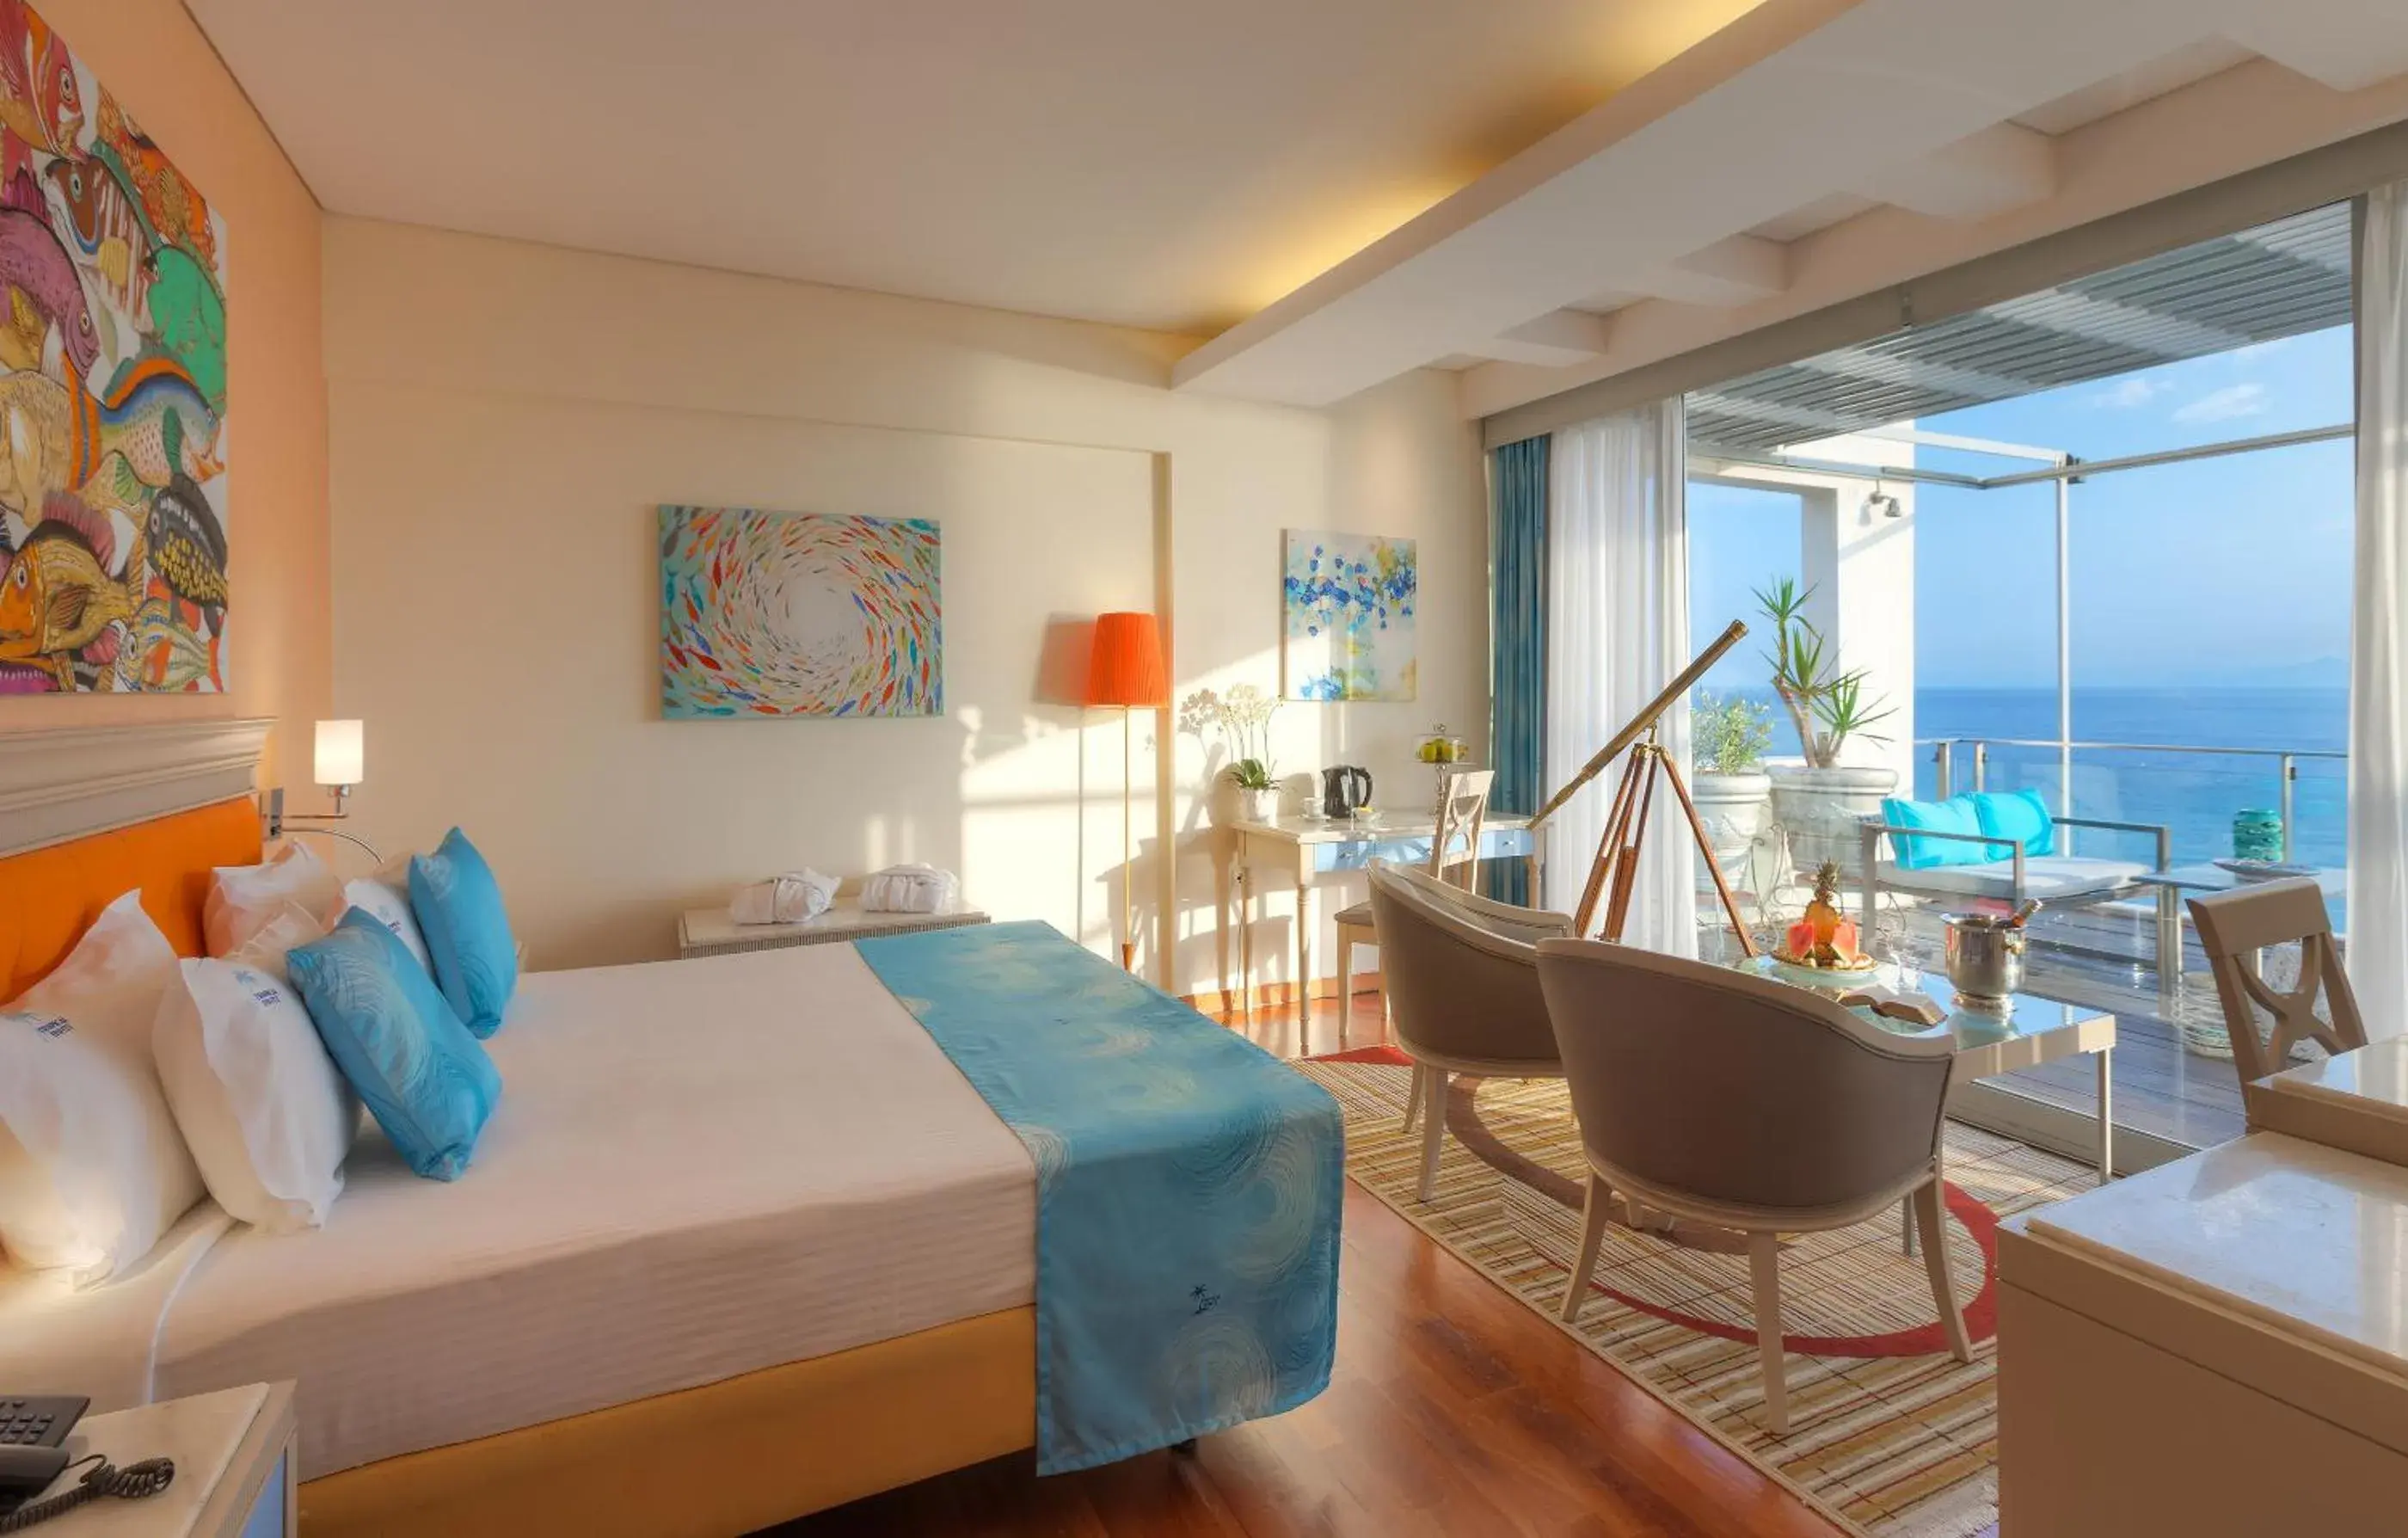 Bedroom in Tropical Hotel